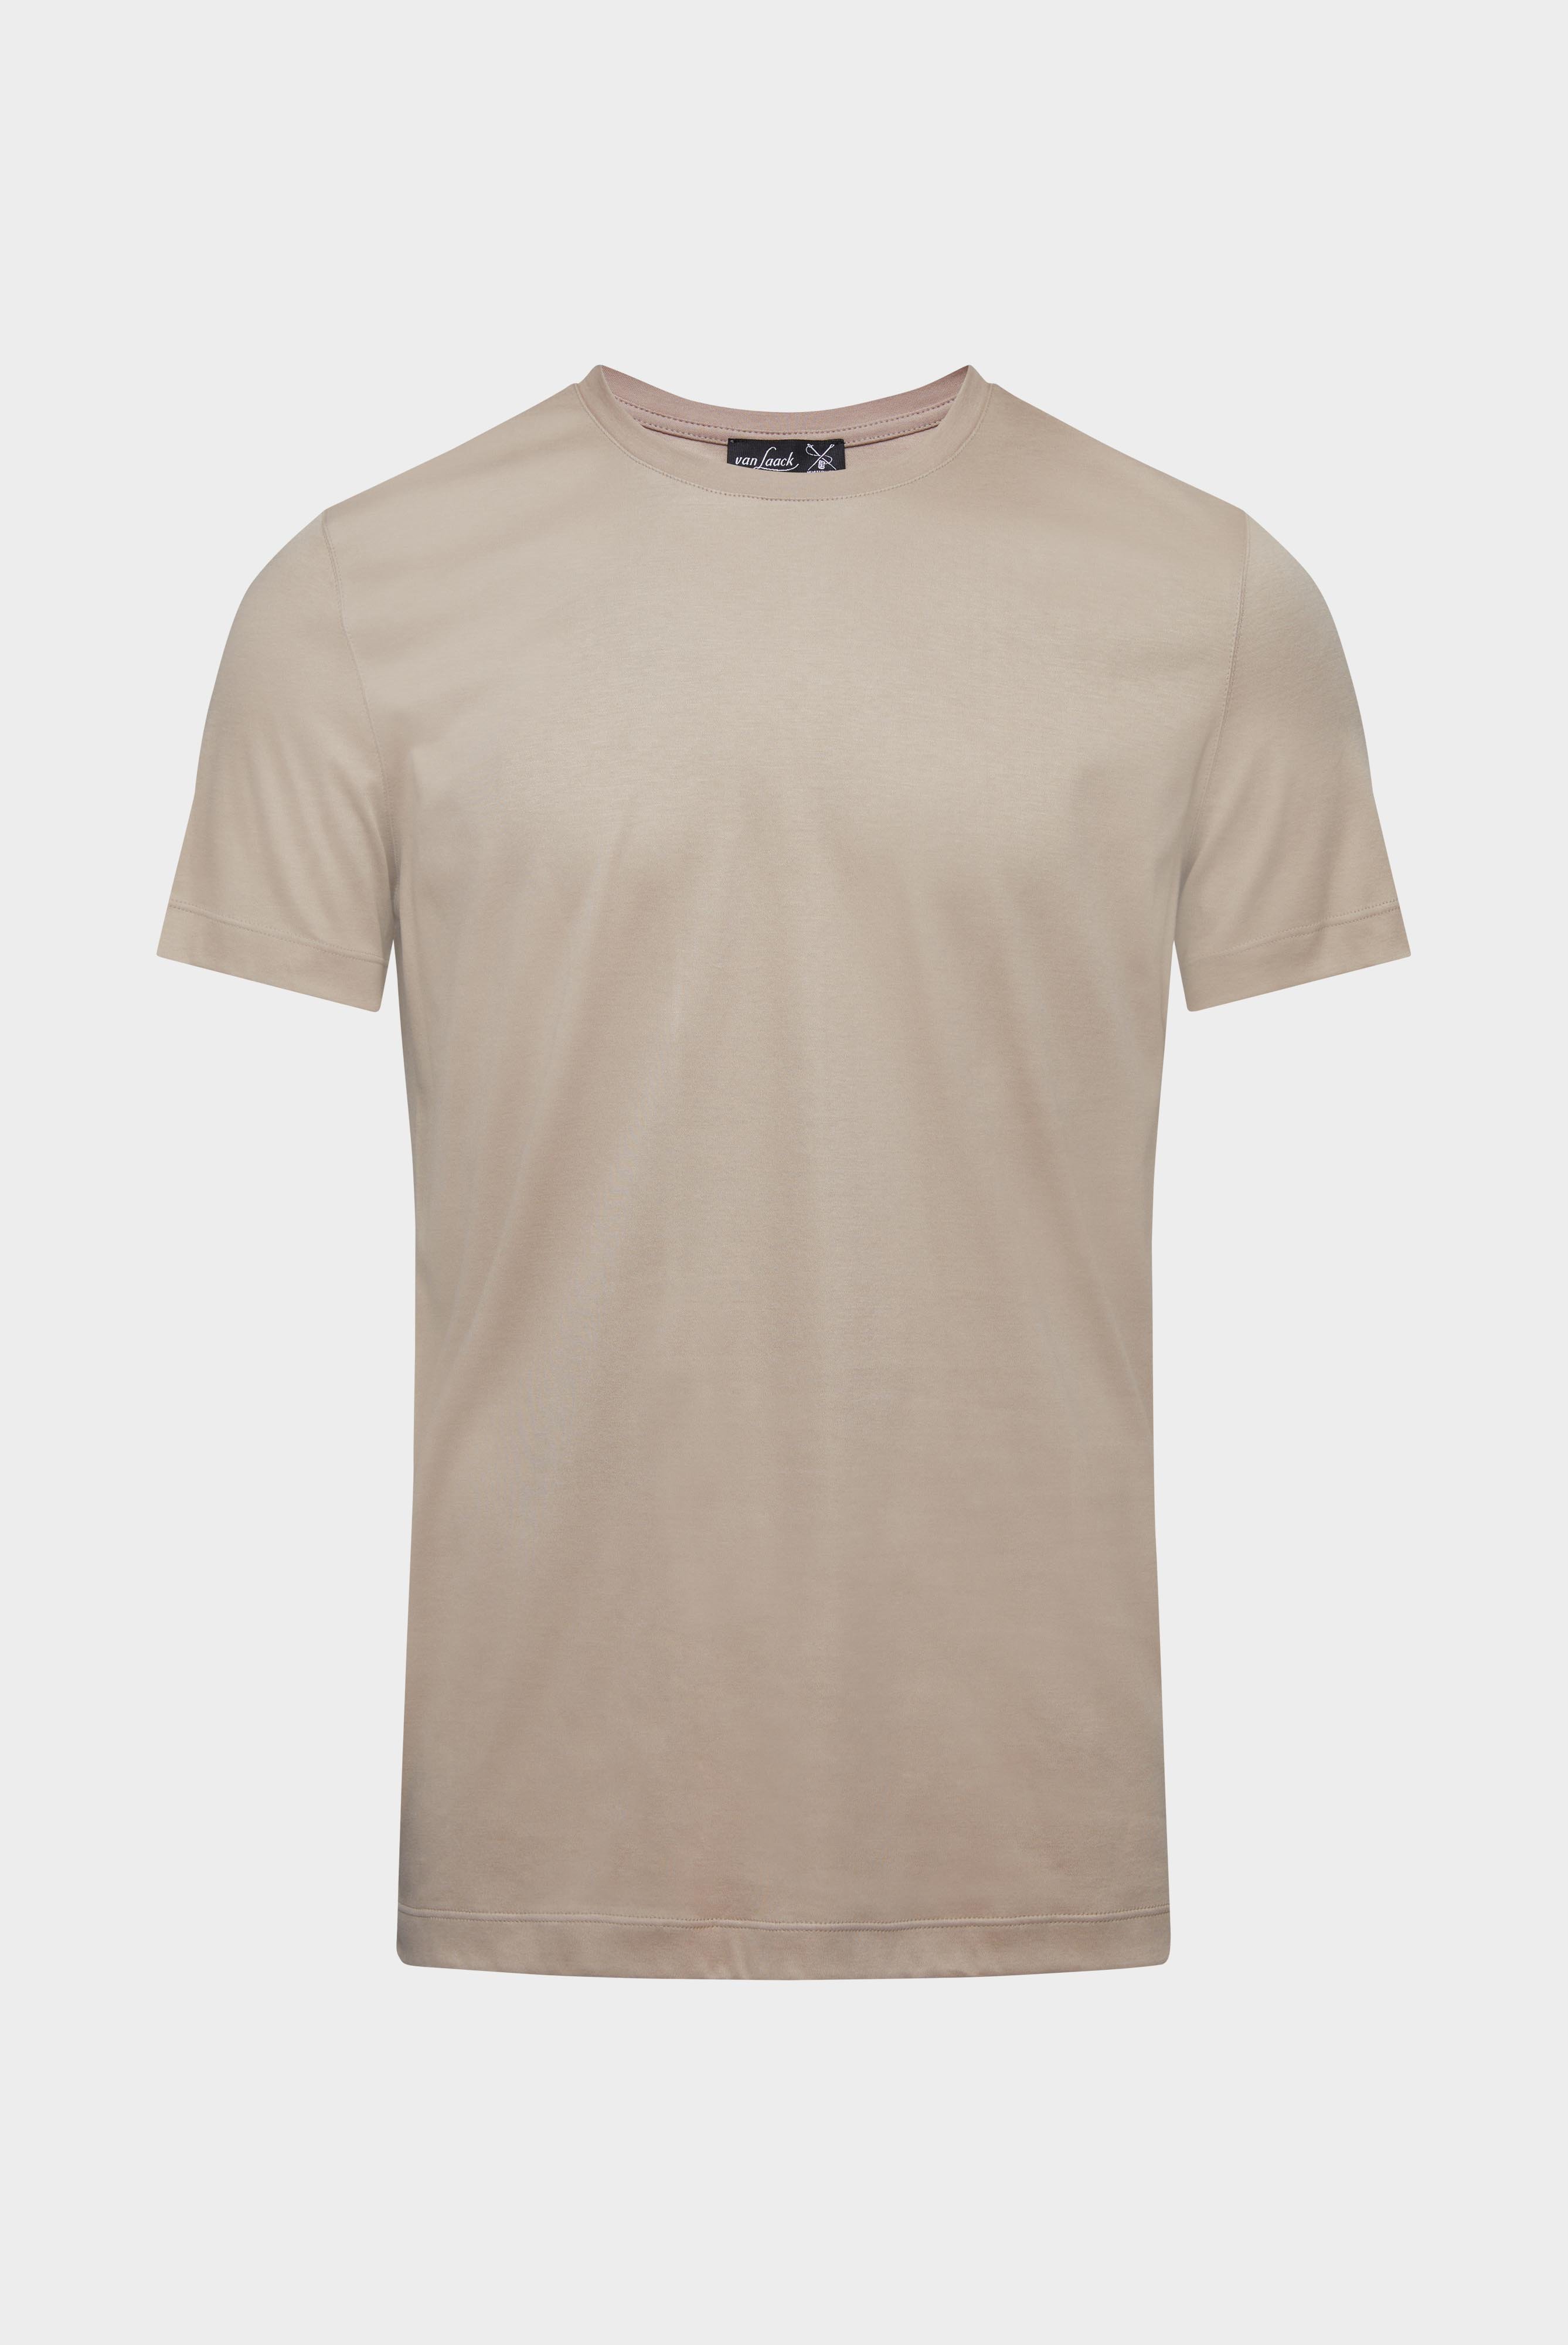 T-Shirts+T-Shirt made of Swiss Cotton+20.1717.UX.180031.140.M